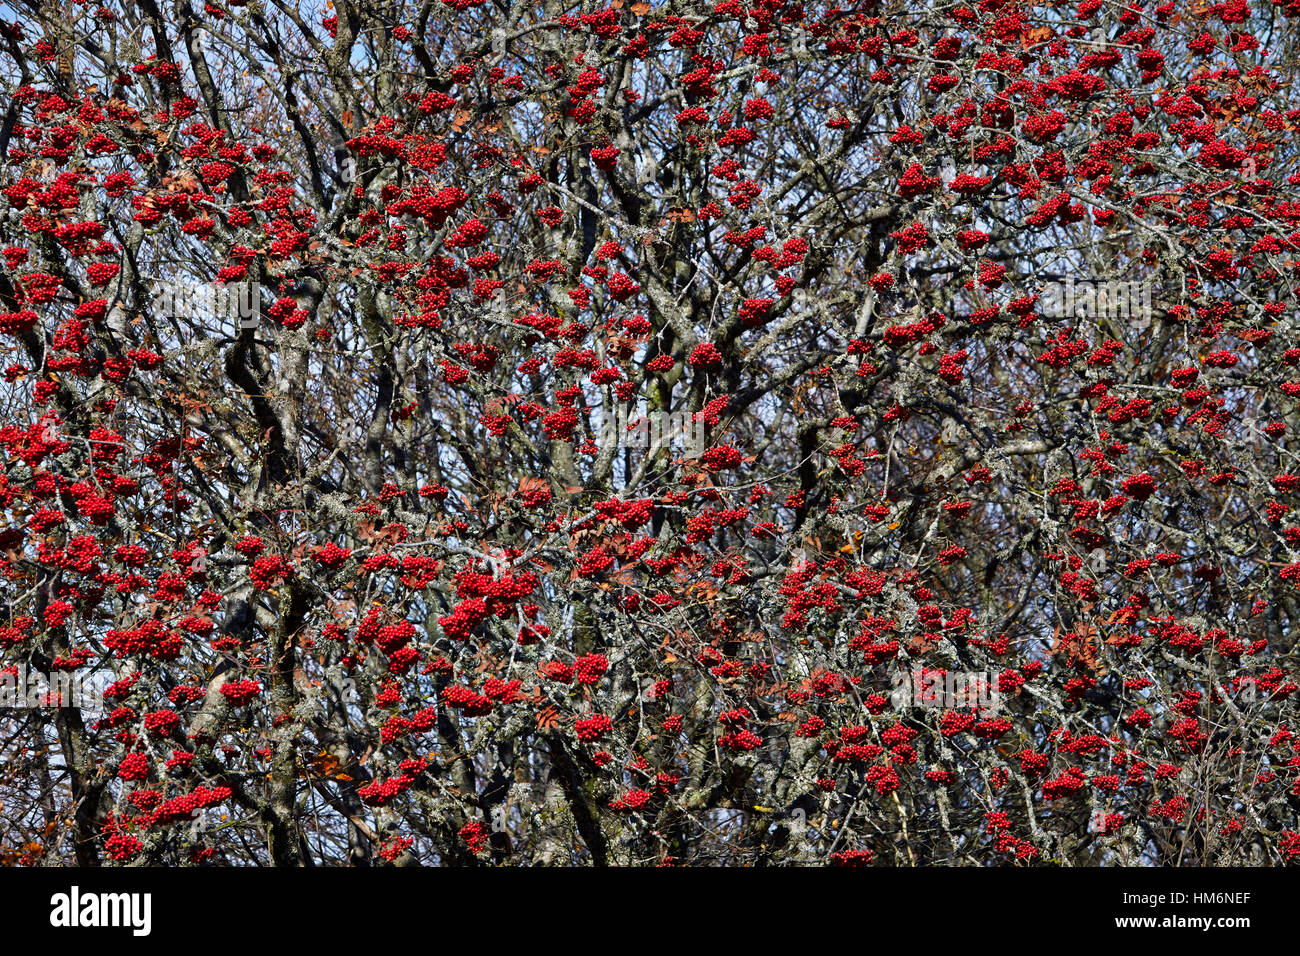 Red fruits of European rowan on a tree Stock Photo